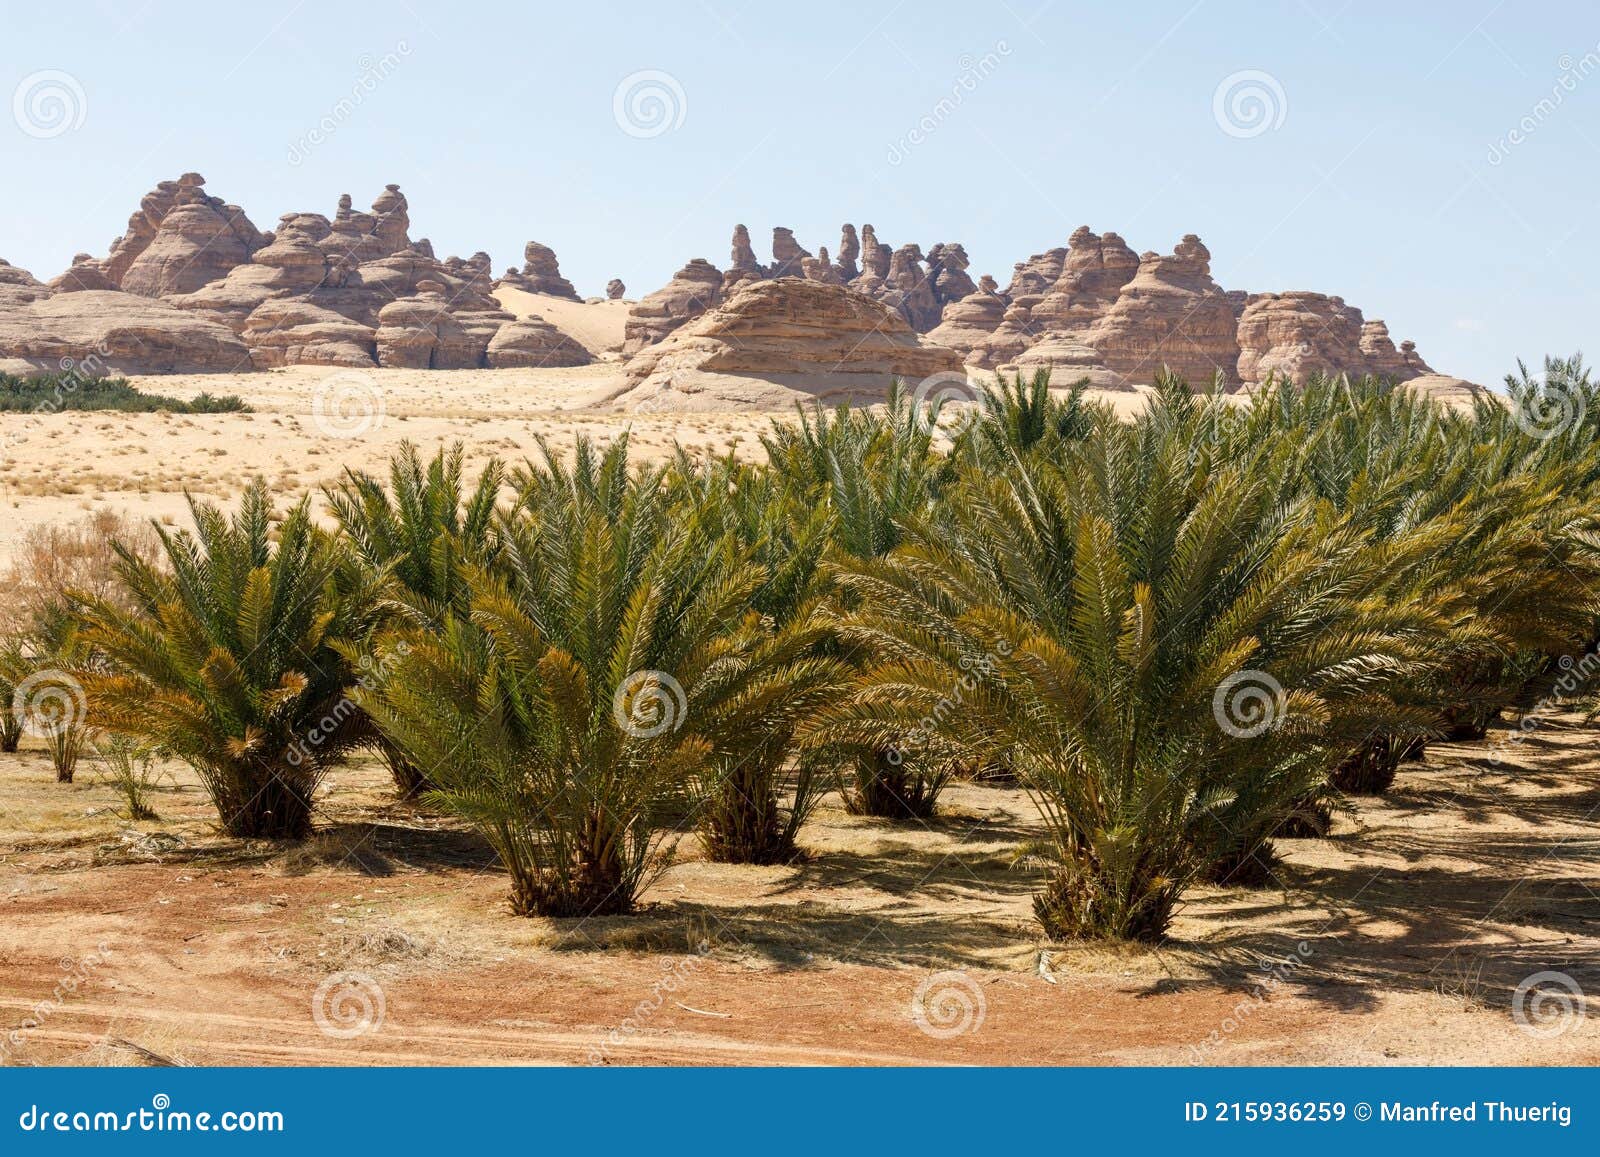 landscape near al ula, saudi arabia with date palms